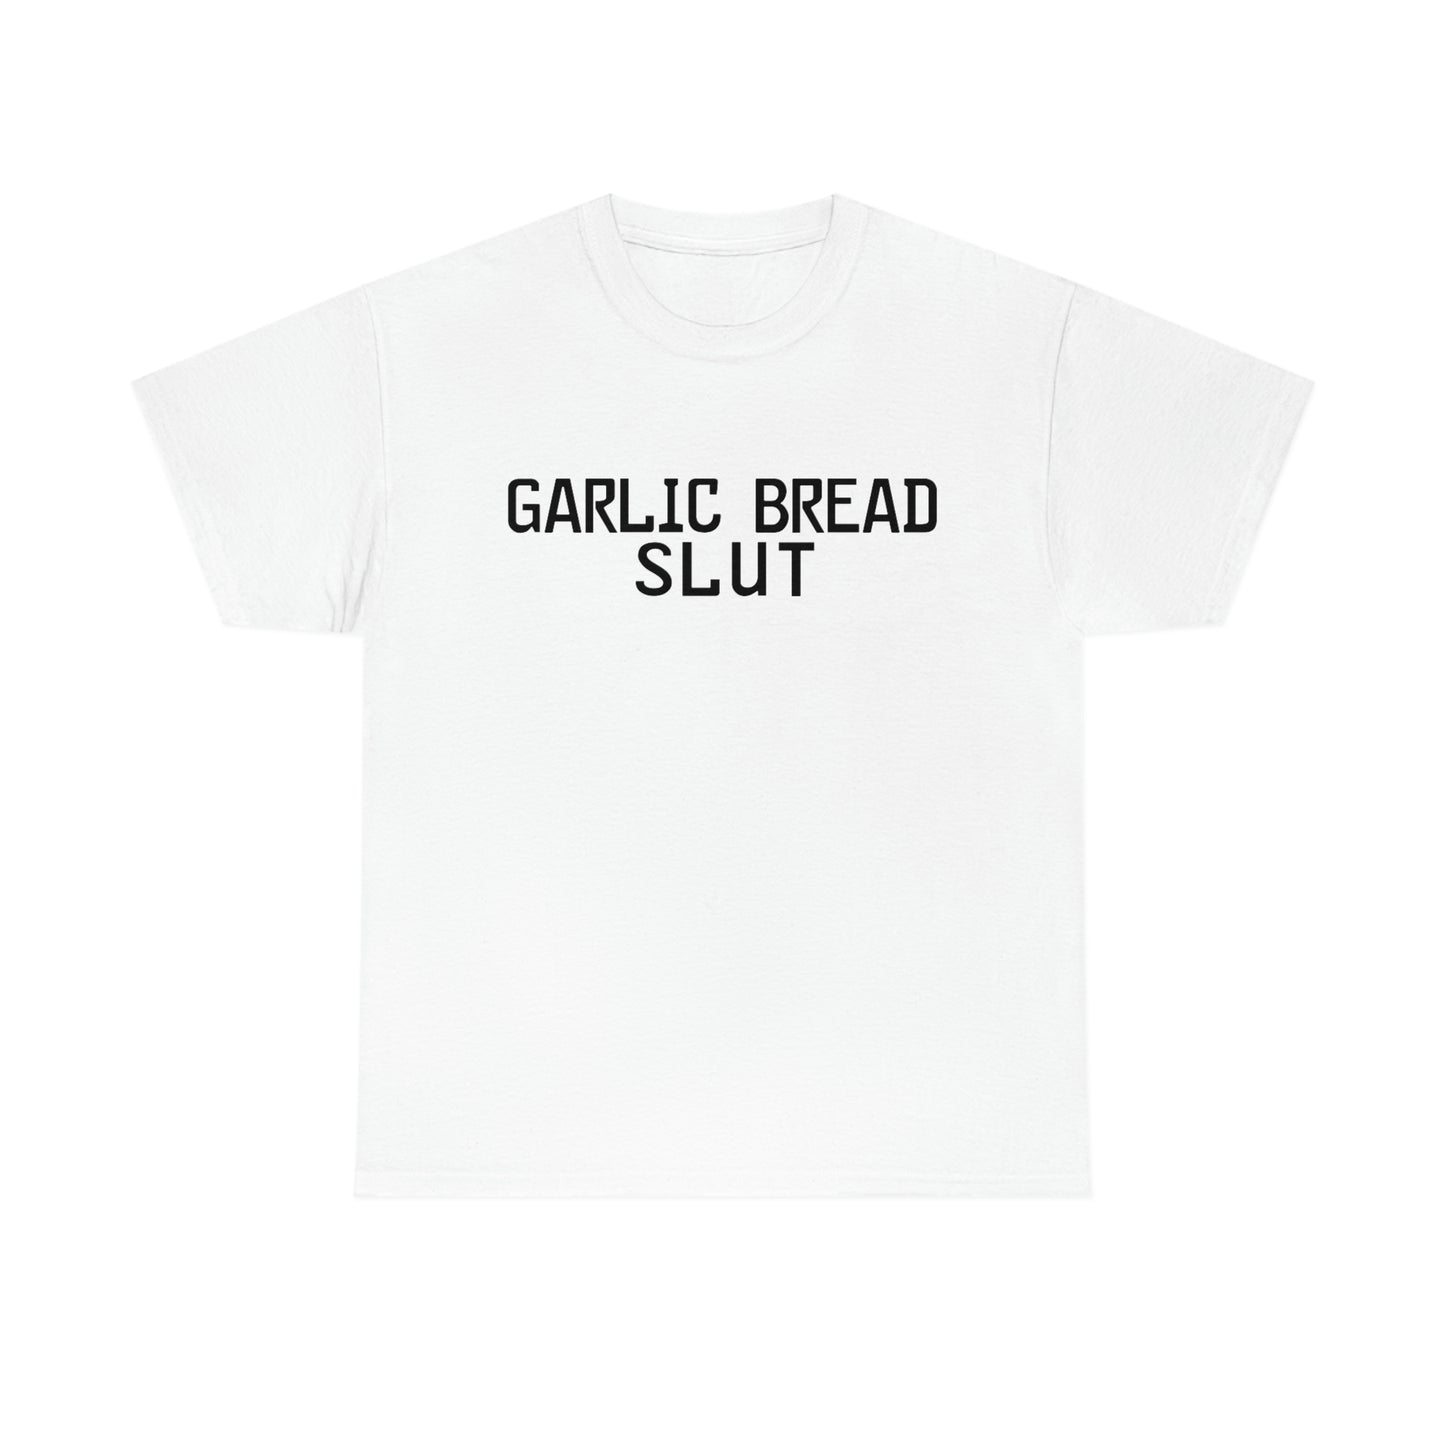 Garlic Bread Slut.